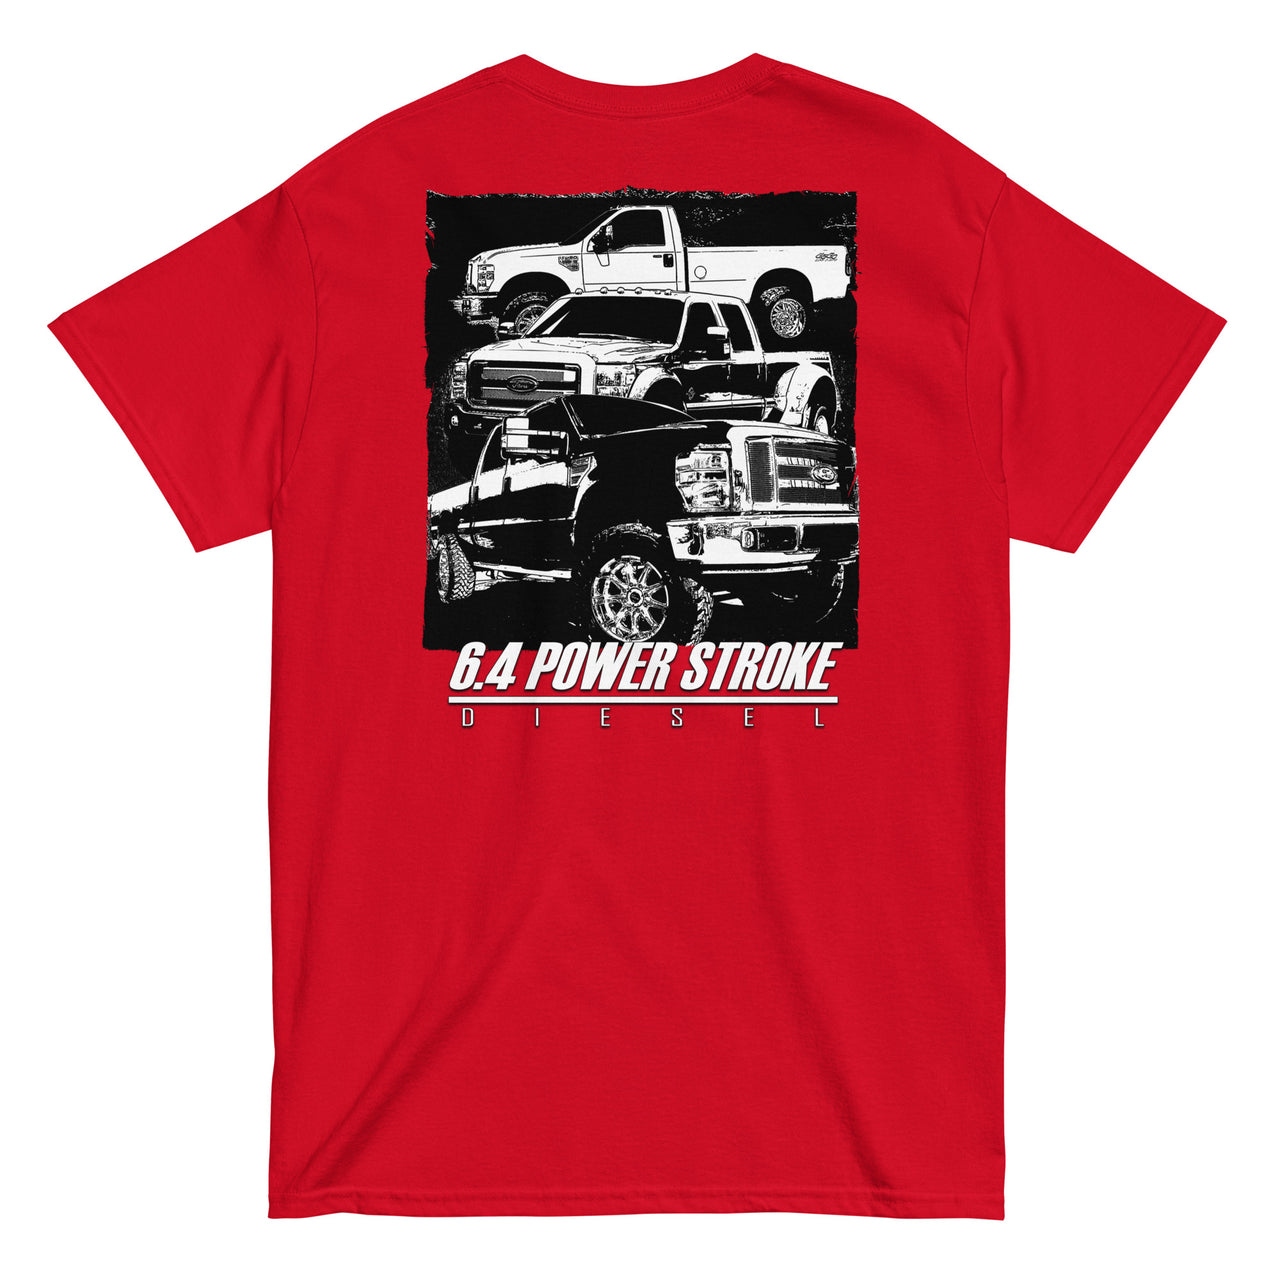 6.4 Power Stroke Trucks t-shirt in red